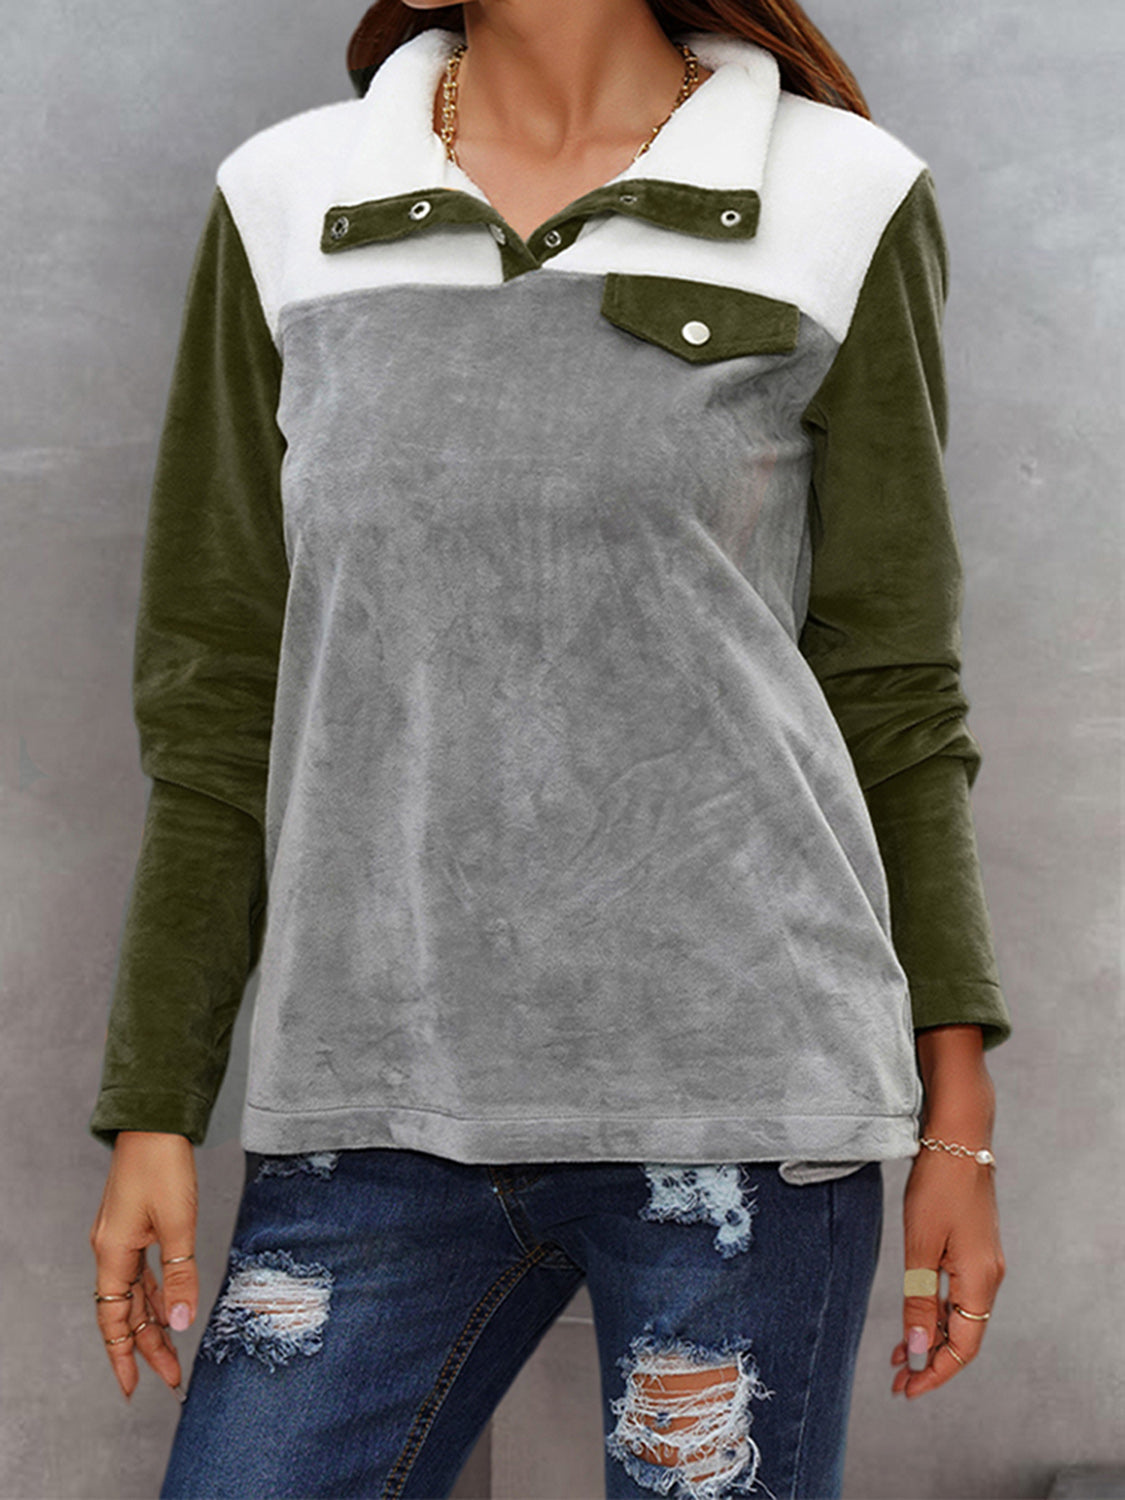 Color Block Collared Sweatshirt with Pockets